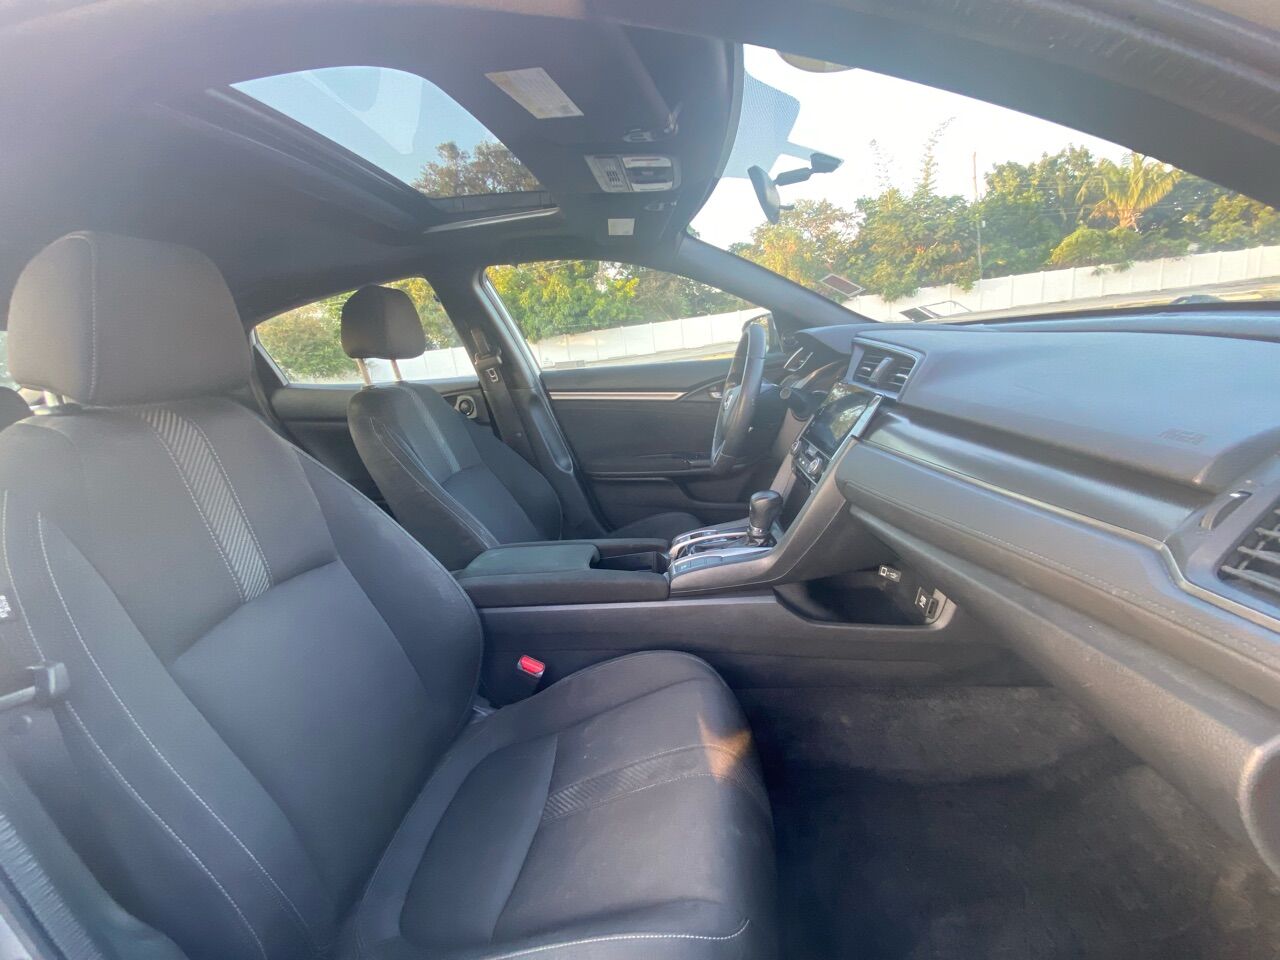 2018 HONDA Civic Hatchback - $13,800